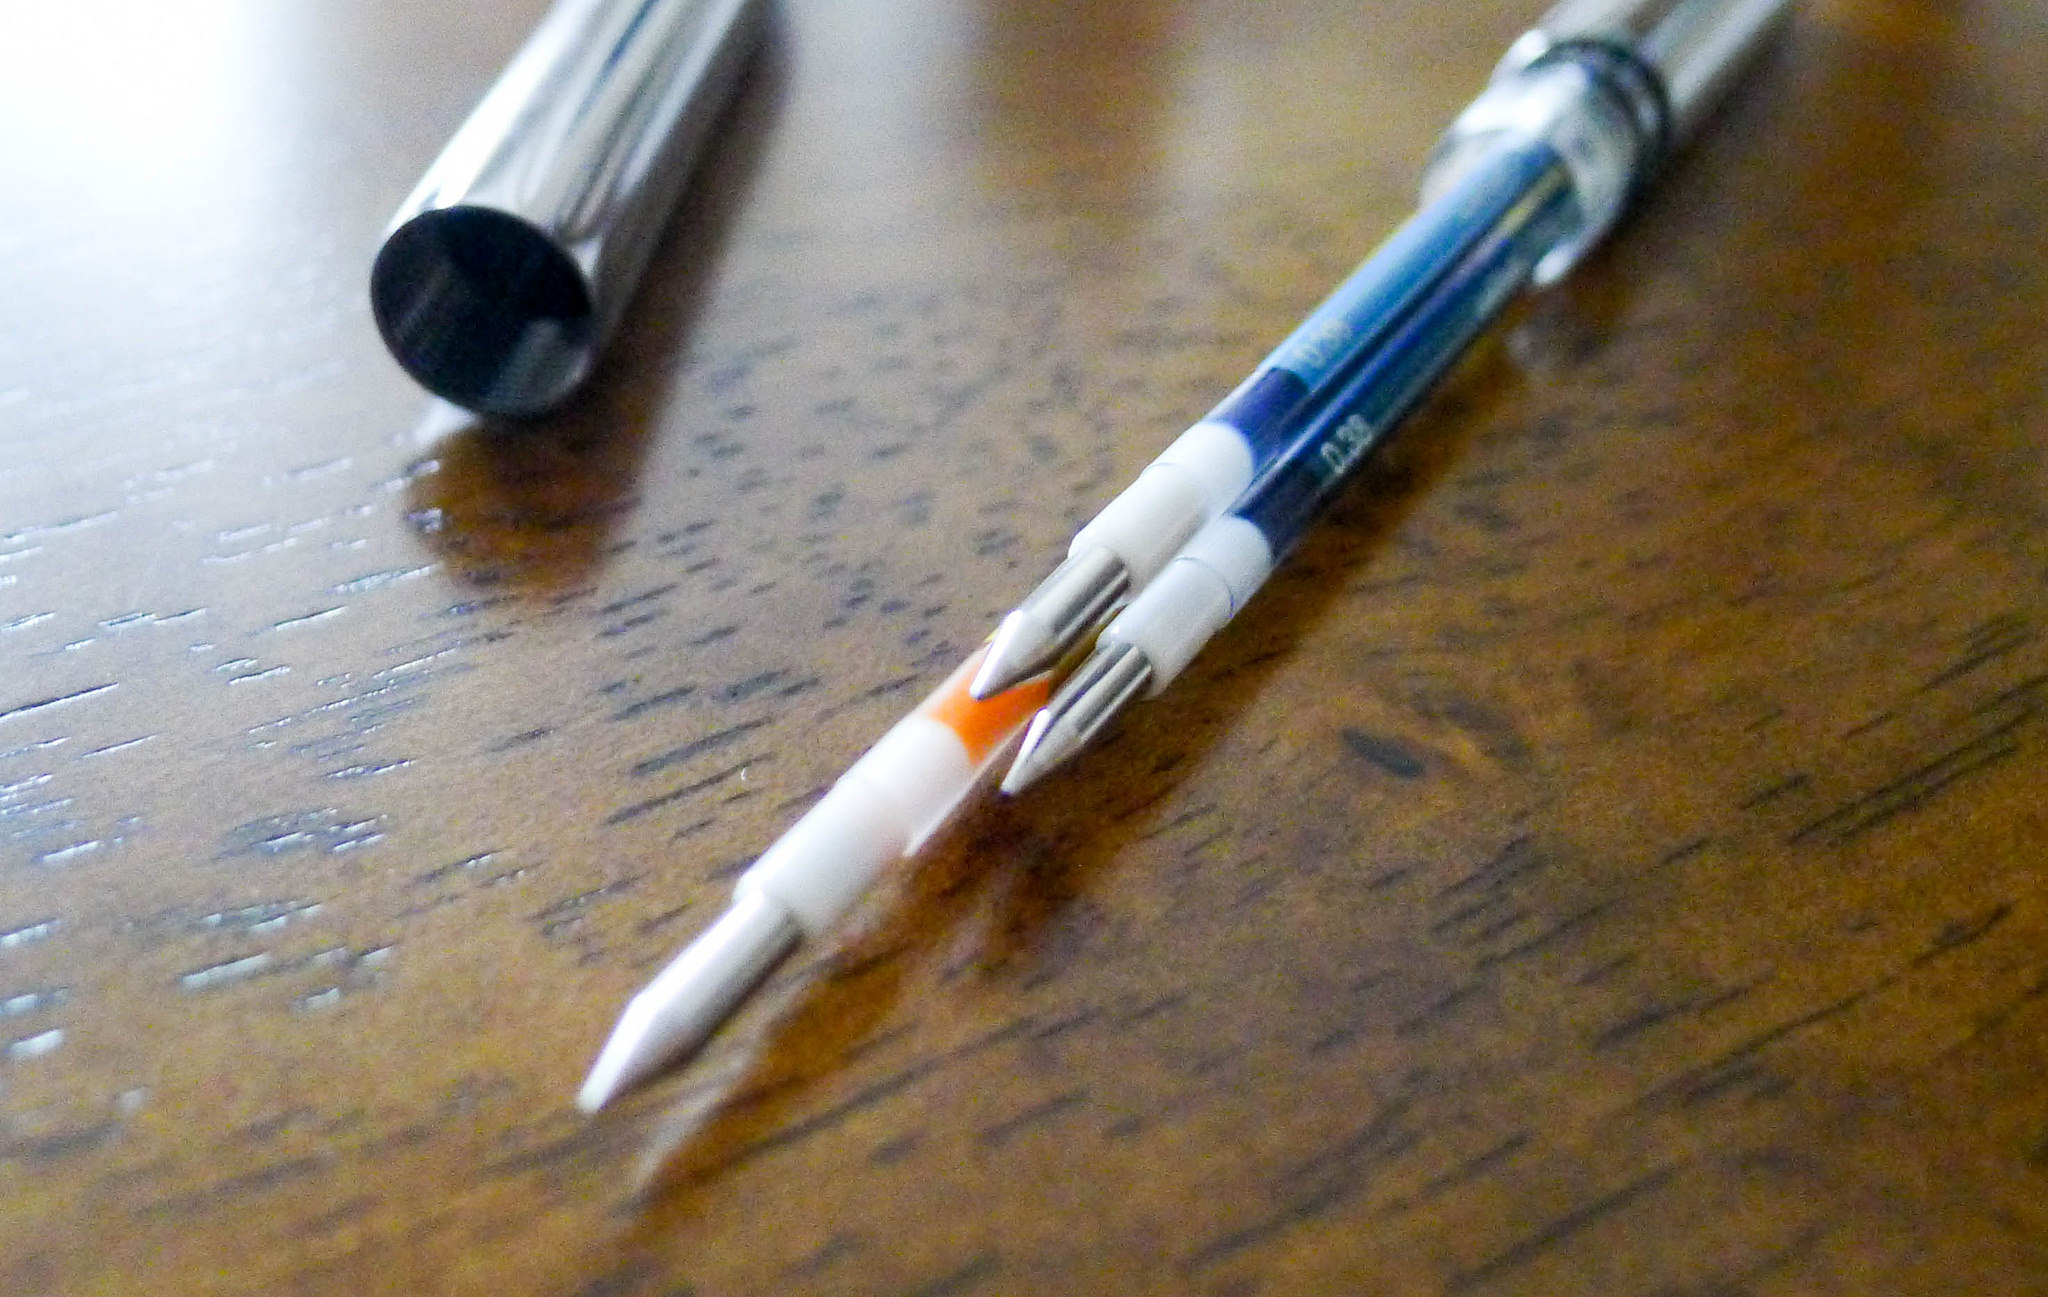 Review: Muji Gel Ink Pen 0.38mm Blue — The Pen Addict